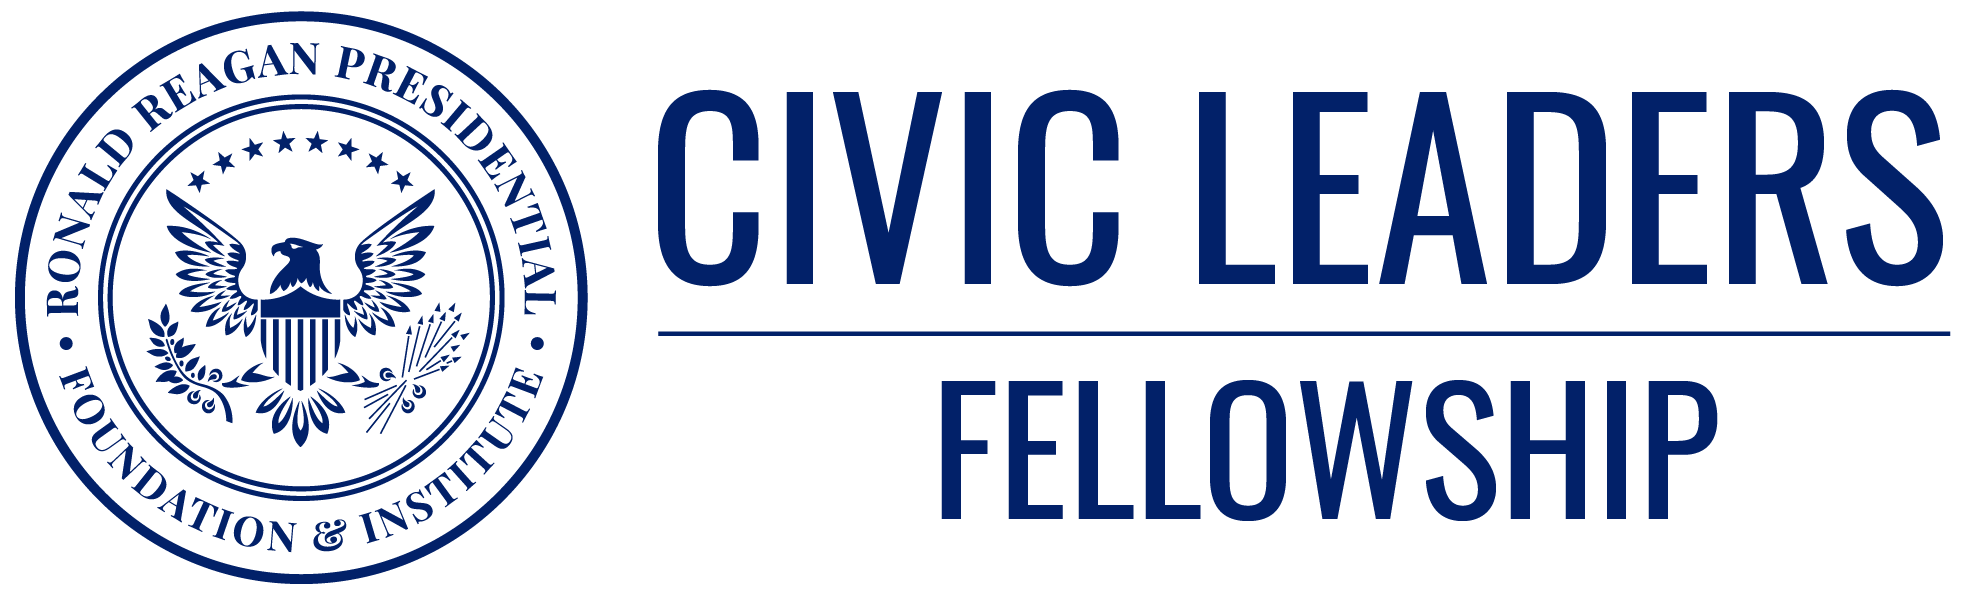 Civic Leaders Fellowship